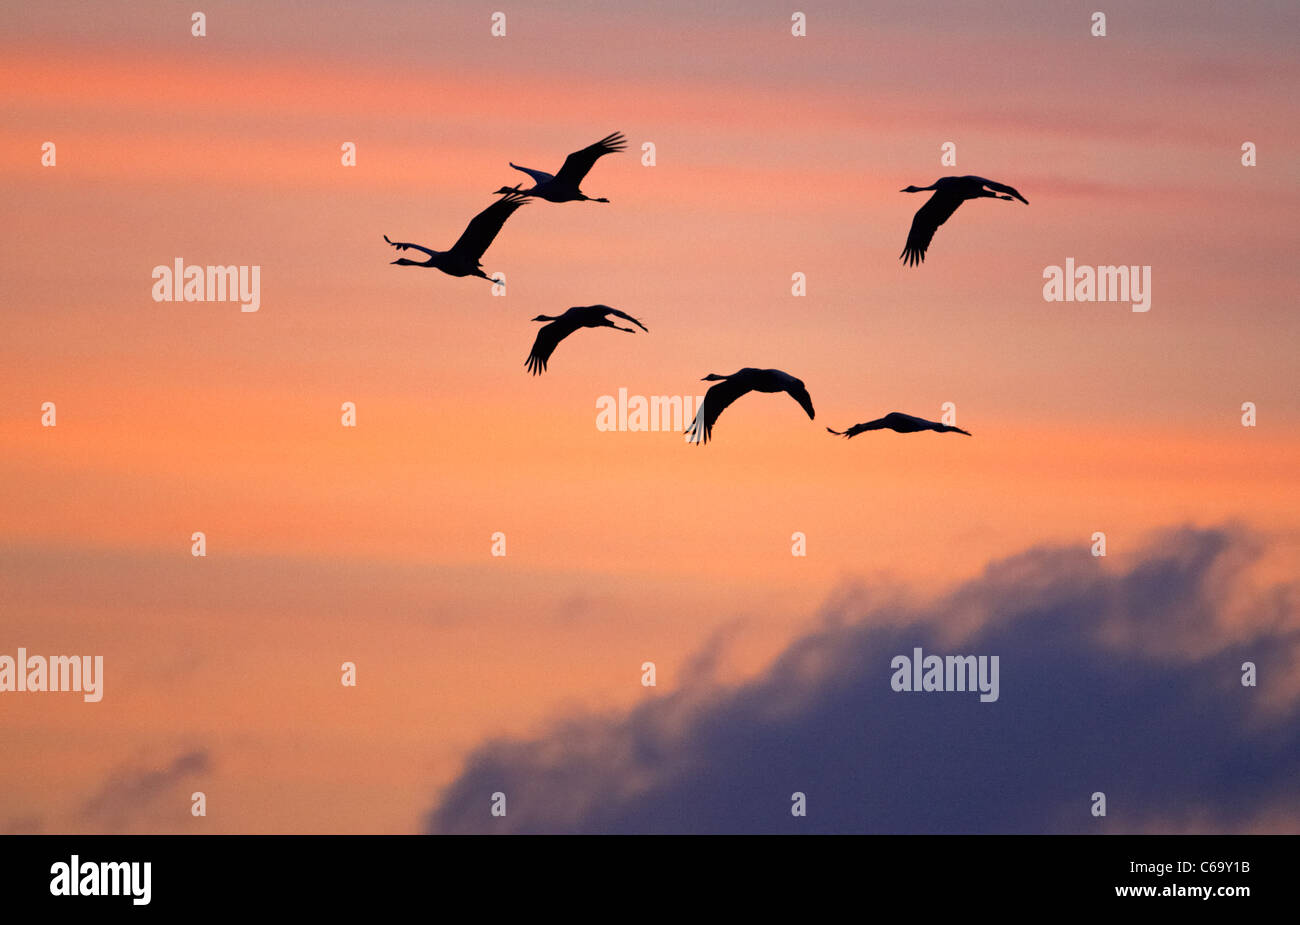 Common Crane, Eurasian Crane (Grus grus), migrating flock in flight, seen against a colorful morning sky. Stock Photo